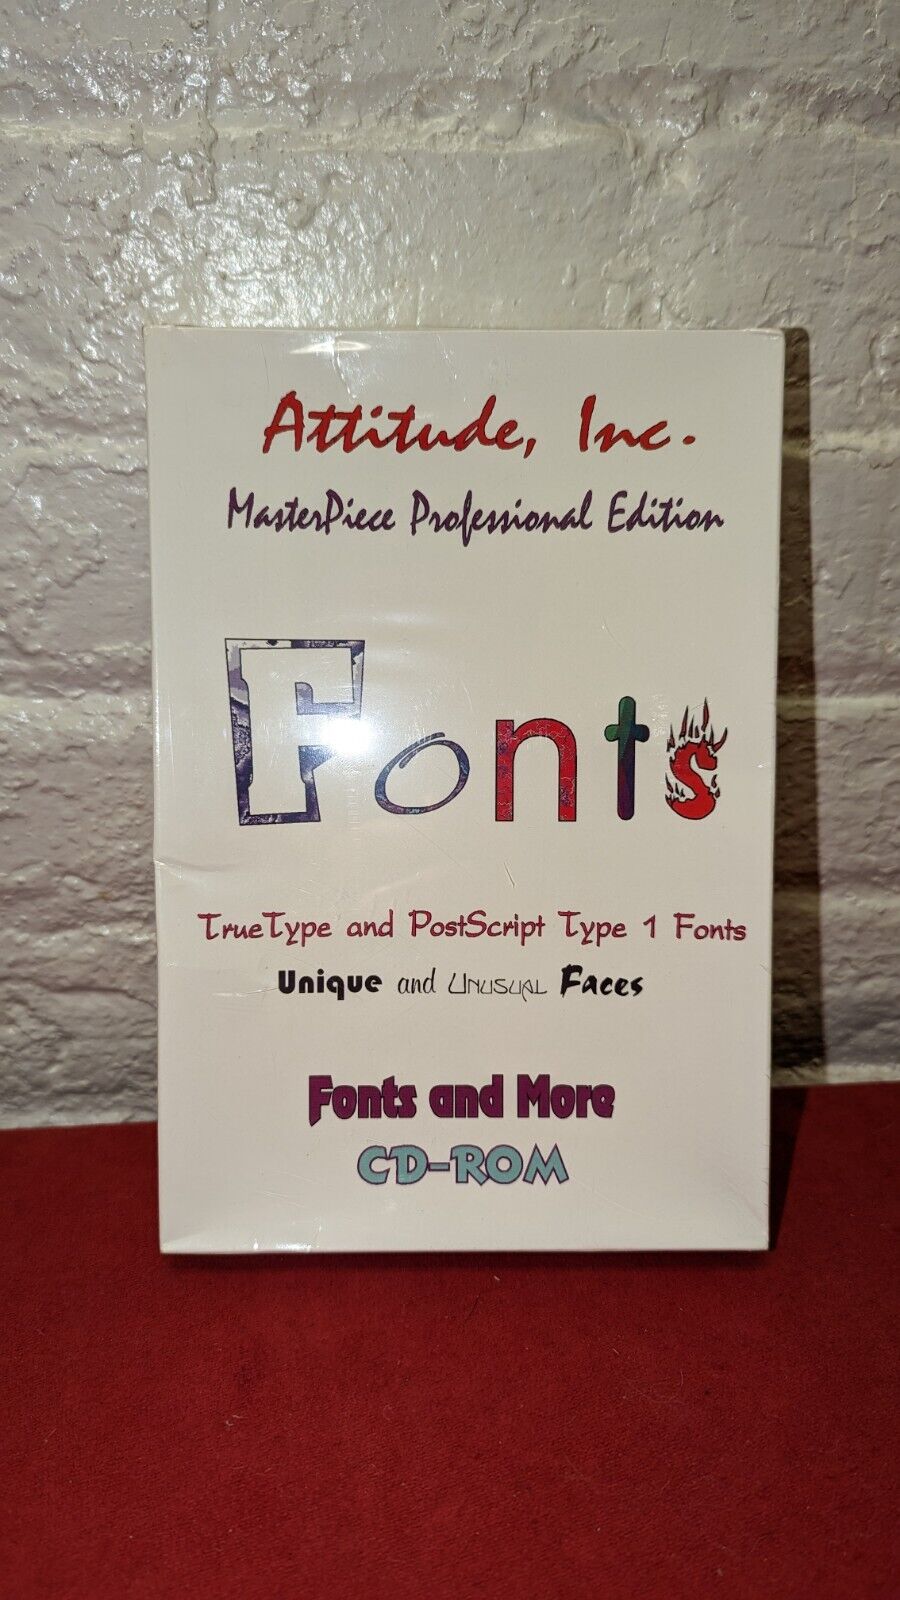 Attitude Inc. Masterpiece Professional Edition Fonts CD ROM Sealed